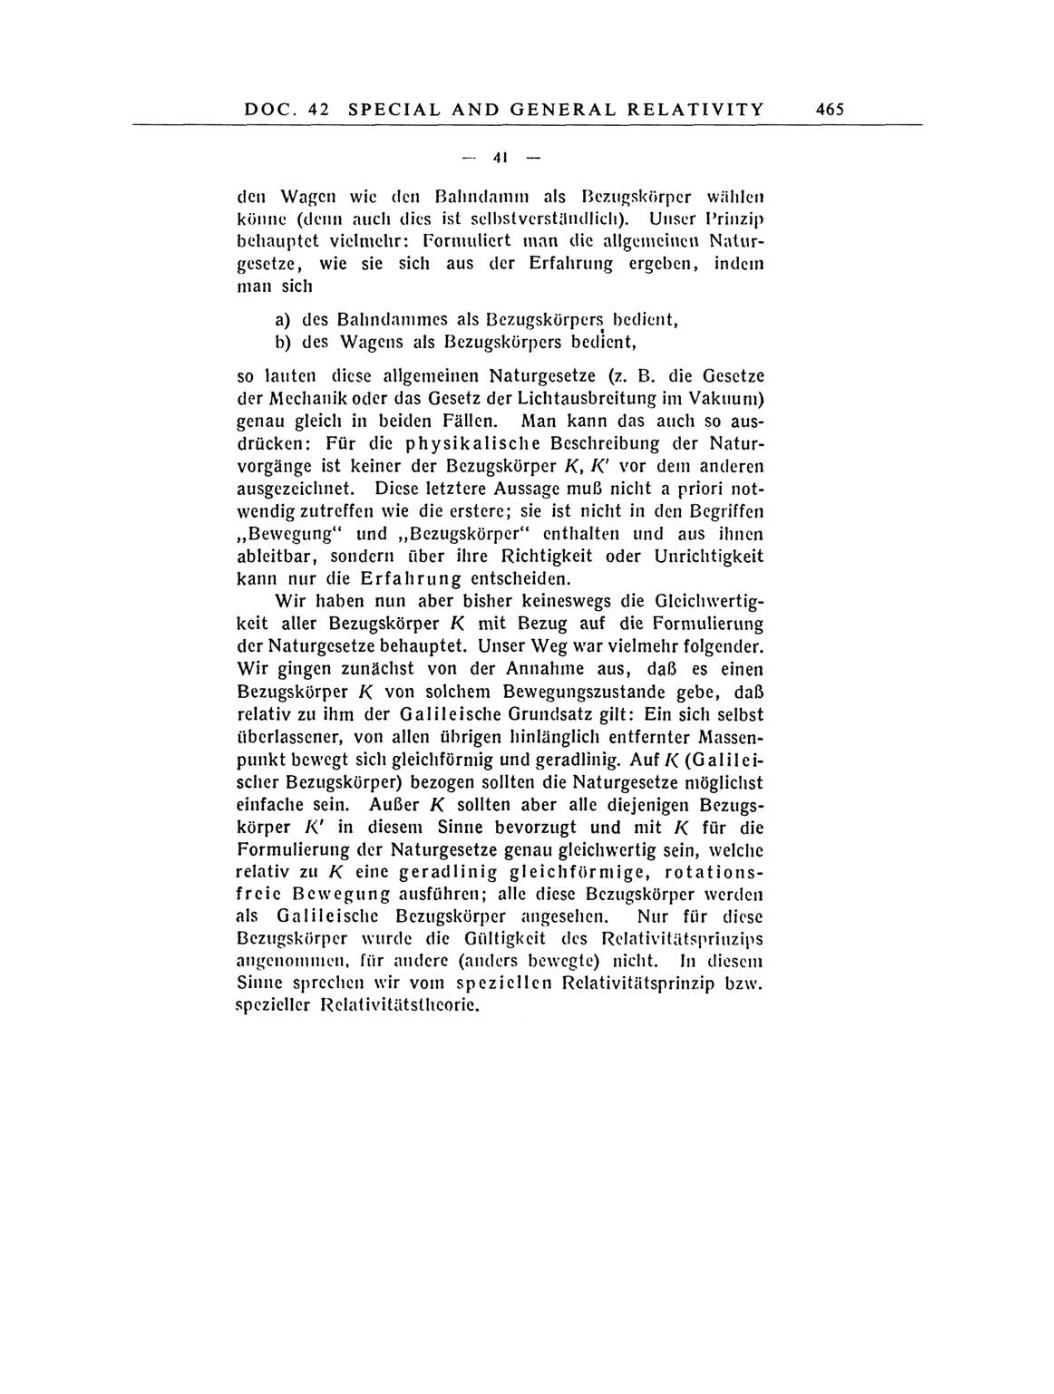 Volume 6: The Berlin Years: Writings, 1914-1917 page 465